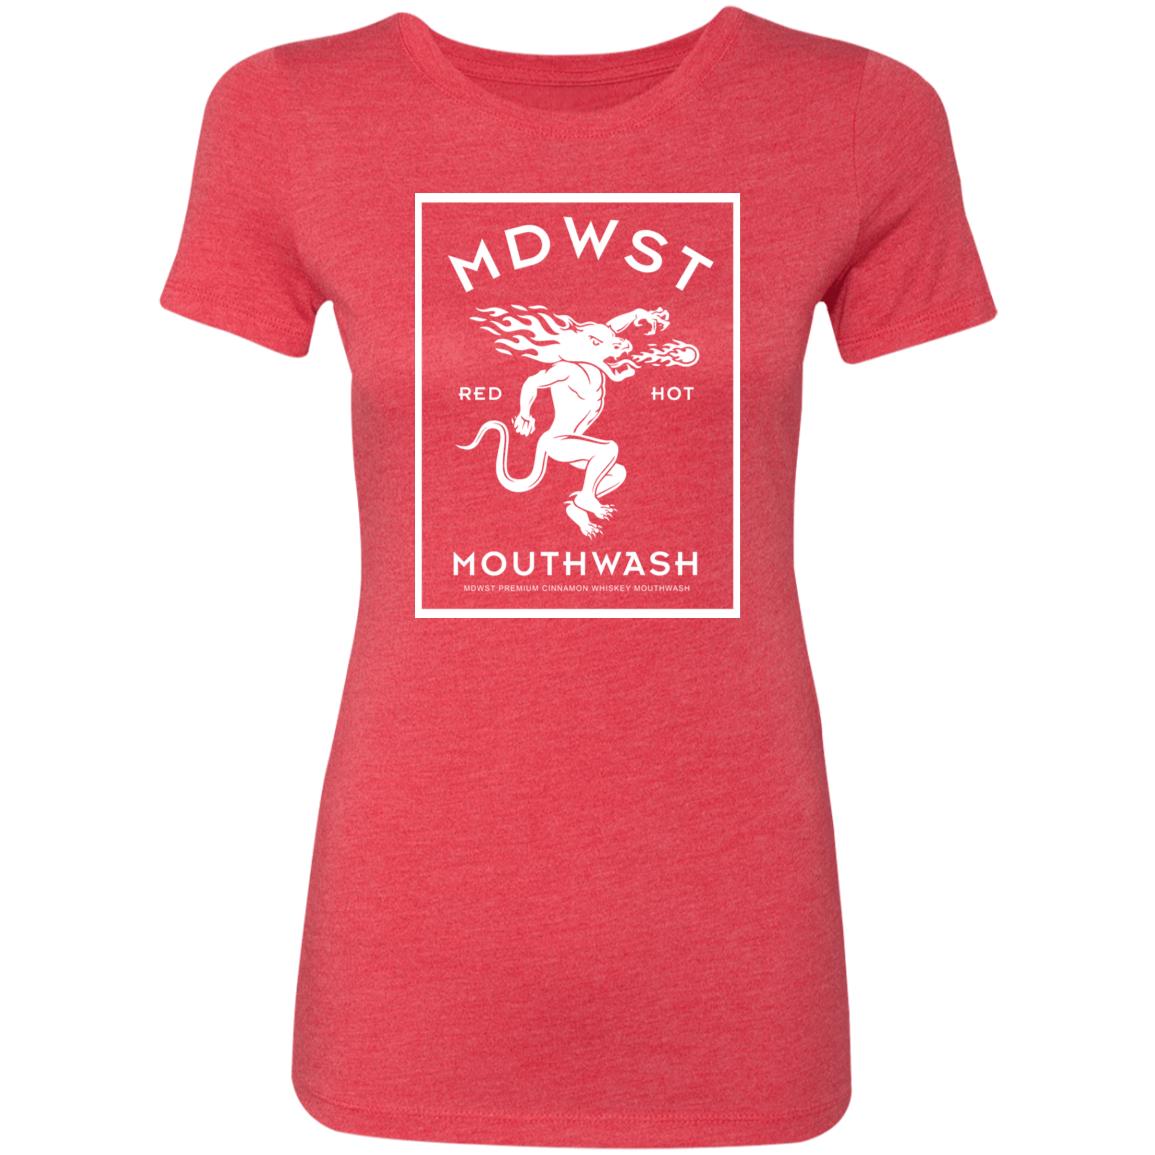 MDWST Mouthwash Ladies' Triblend T-Shirt